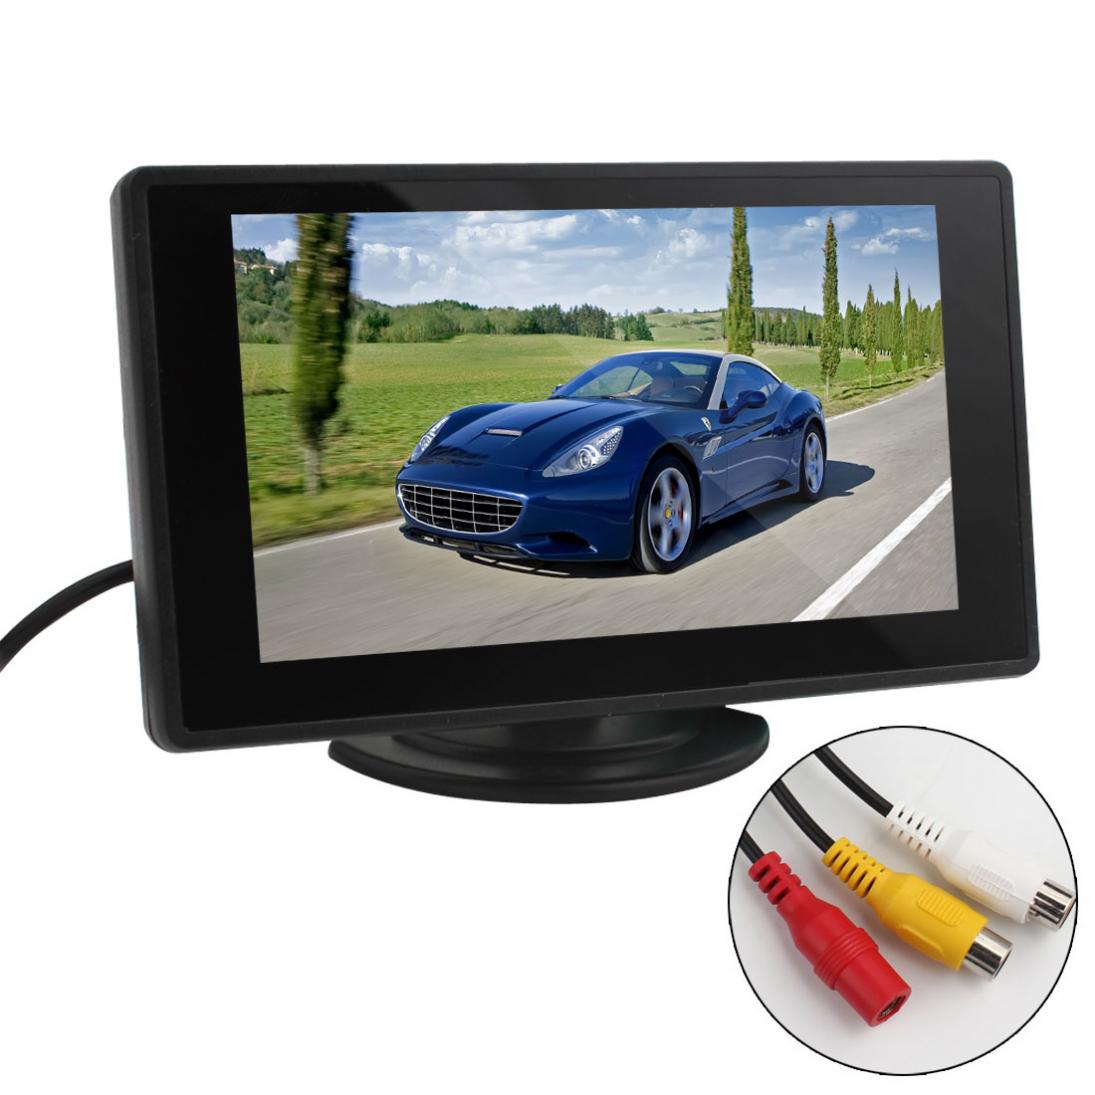 Lcd Auto Monitor 4.3 Inch Tft Display Kleurenscherm Reverse Parking Assistance Video Pal/Ntsc Auto Parking Achteruitkijkspiegel Backup camera